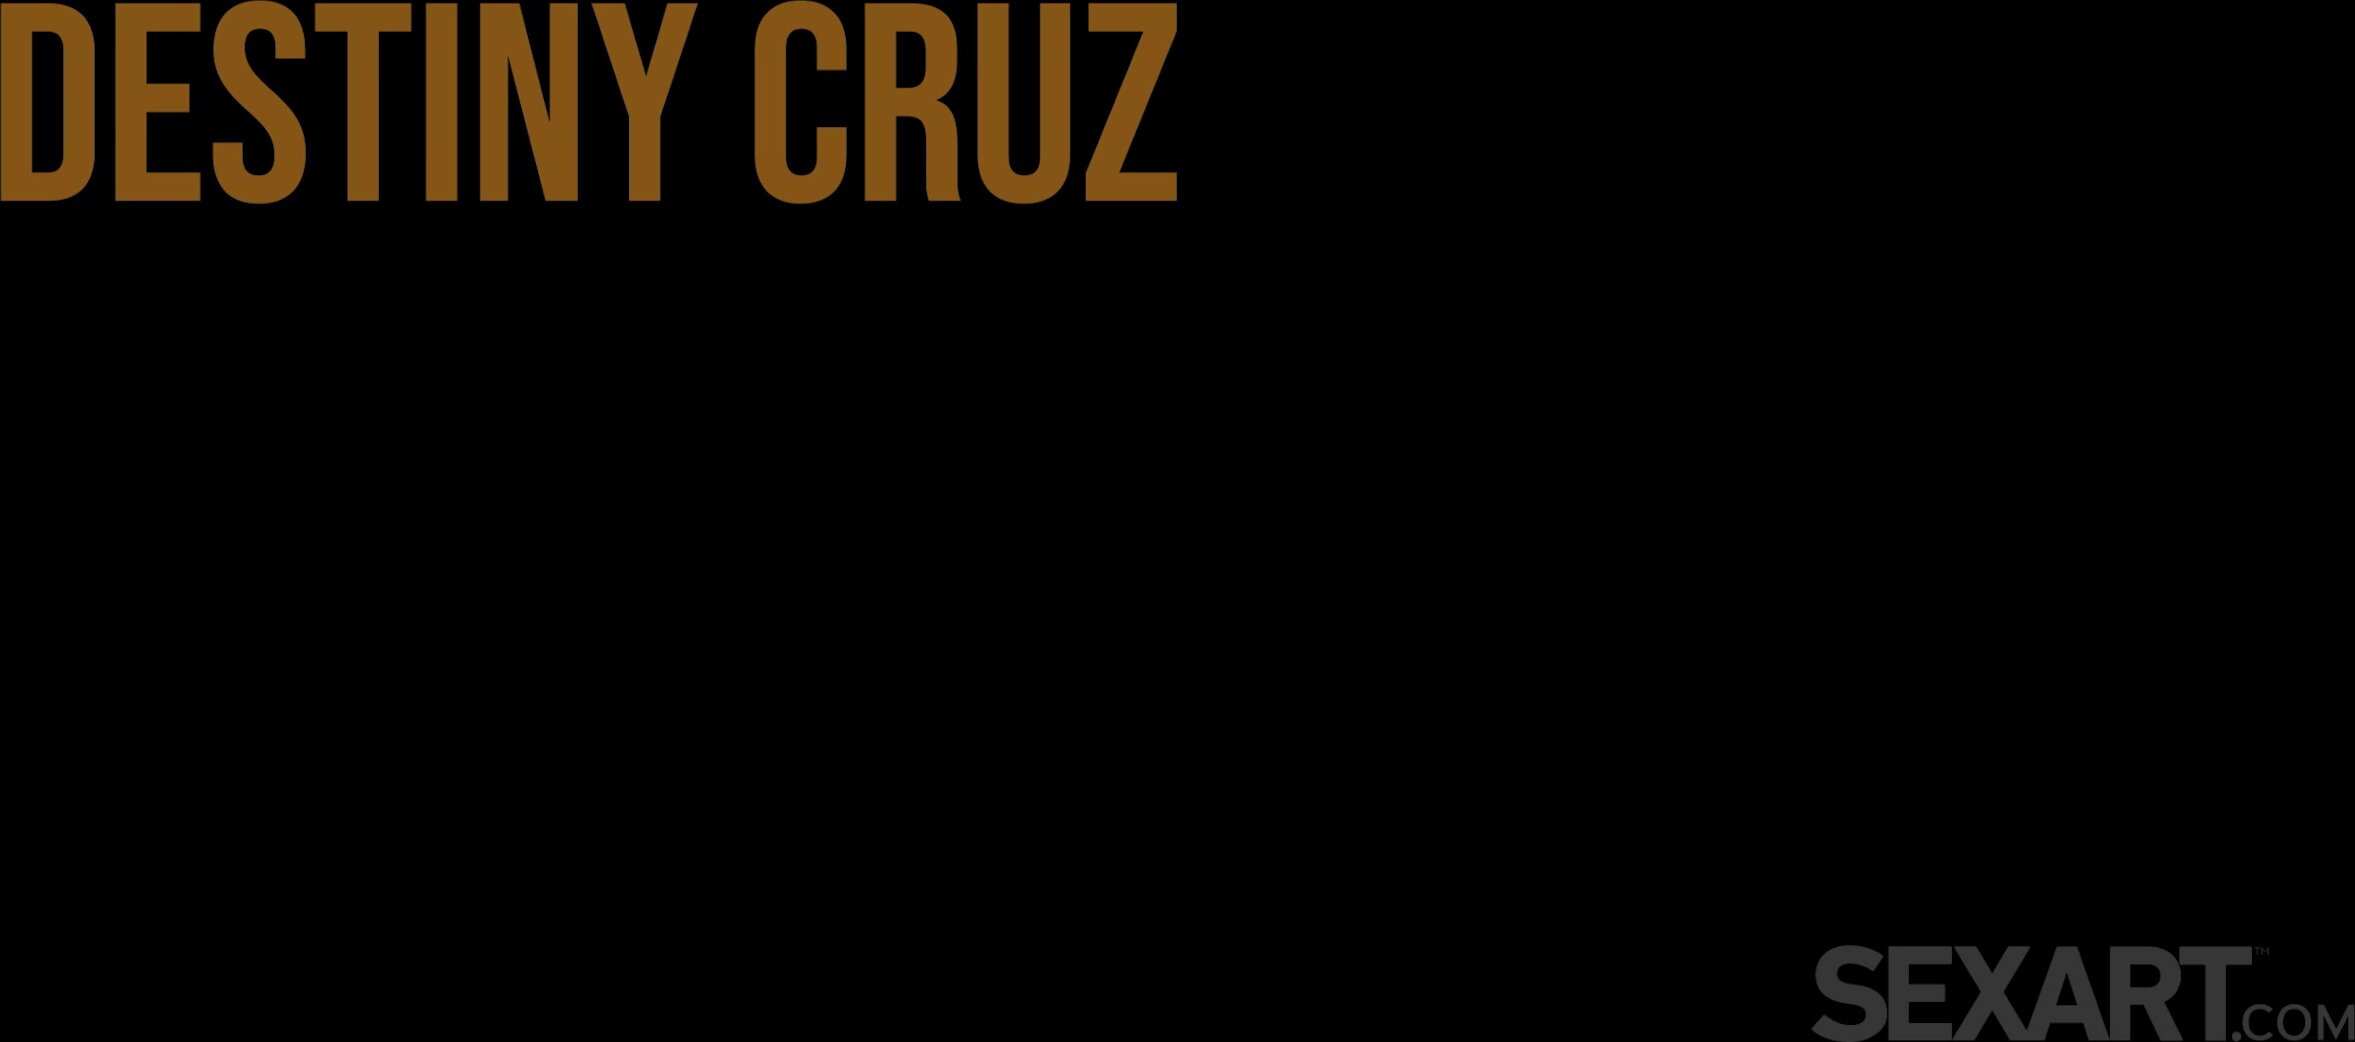 Destiny Cruz - Destiny Calling in 4K